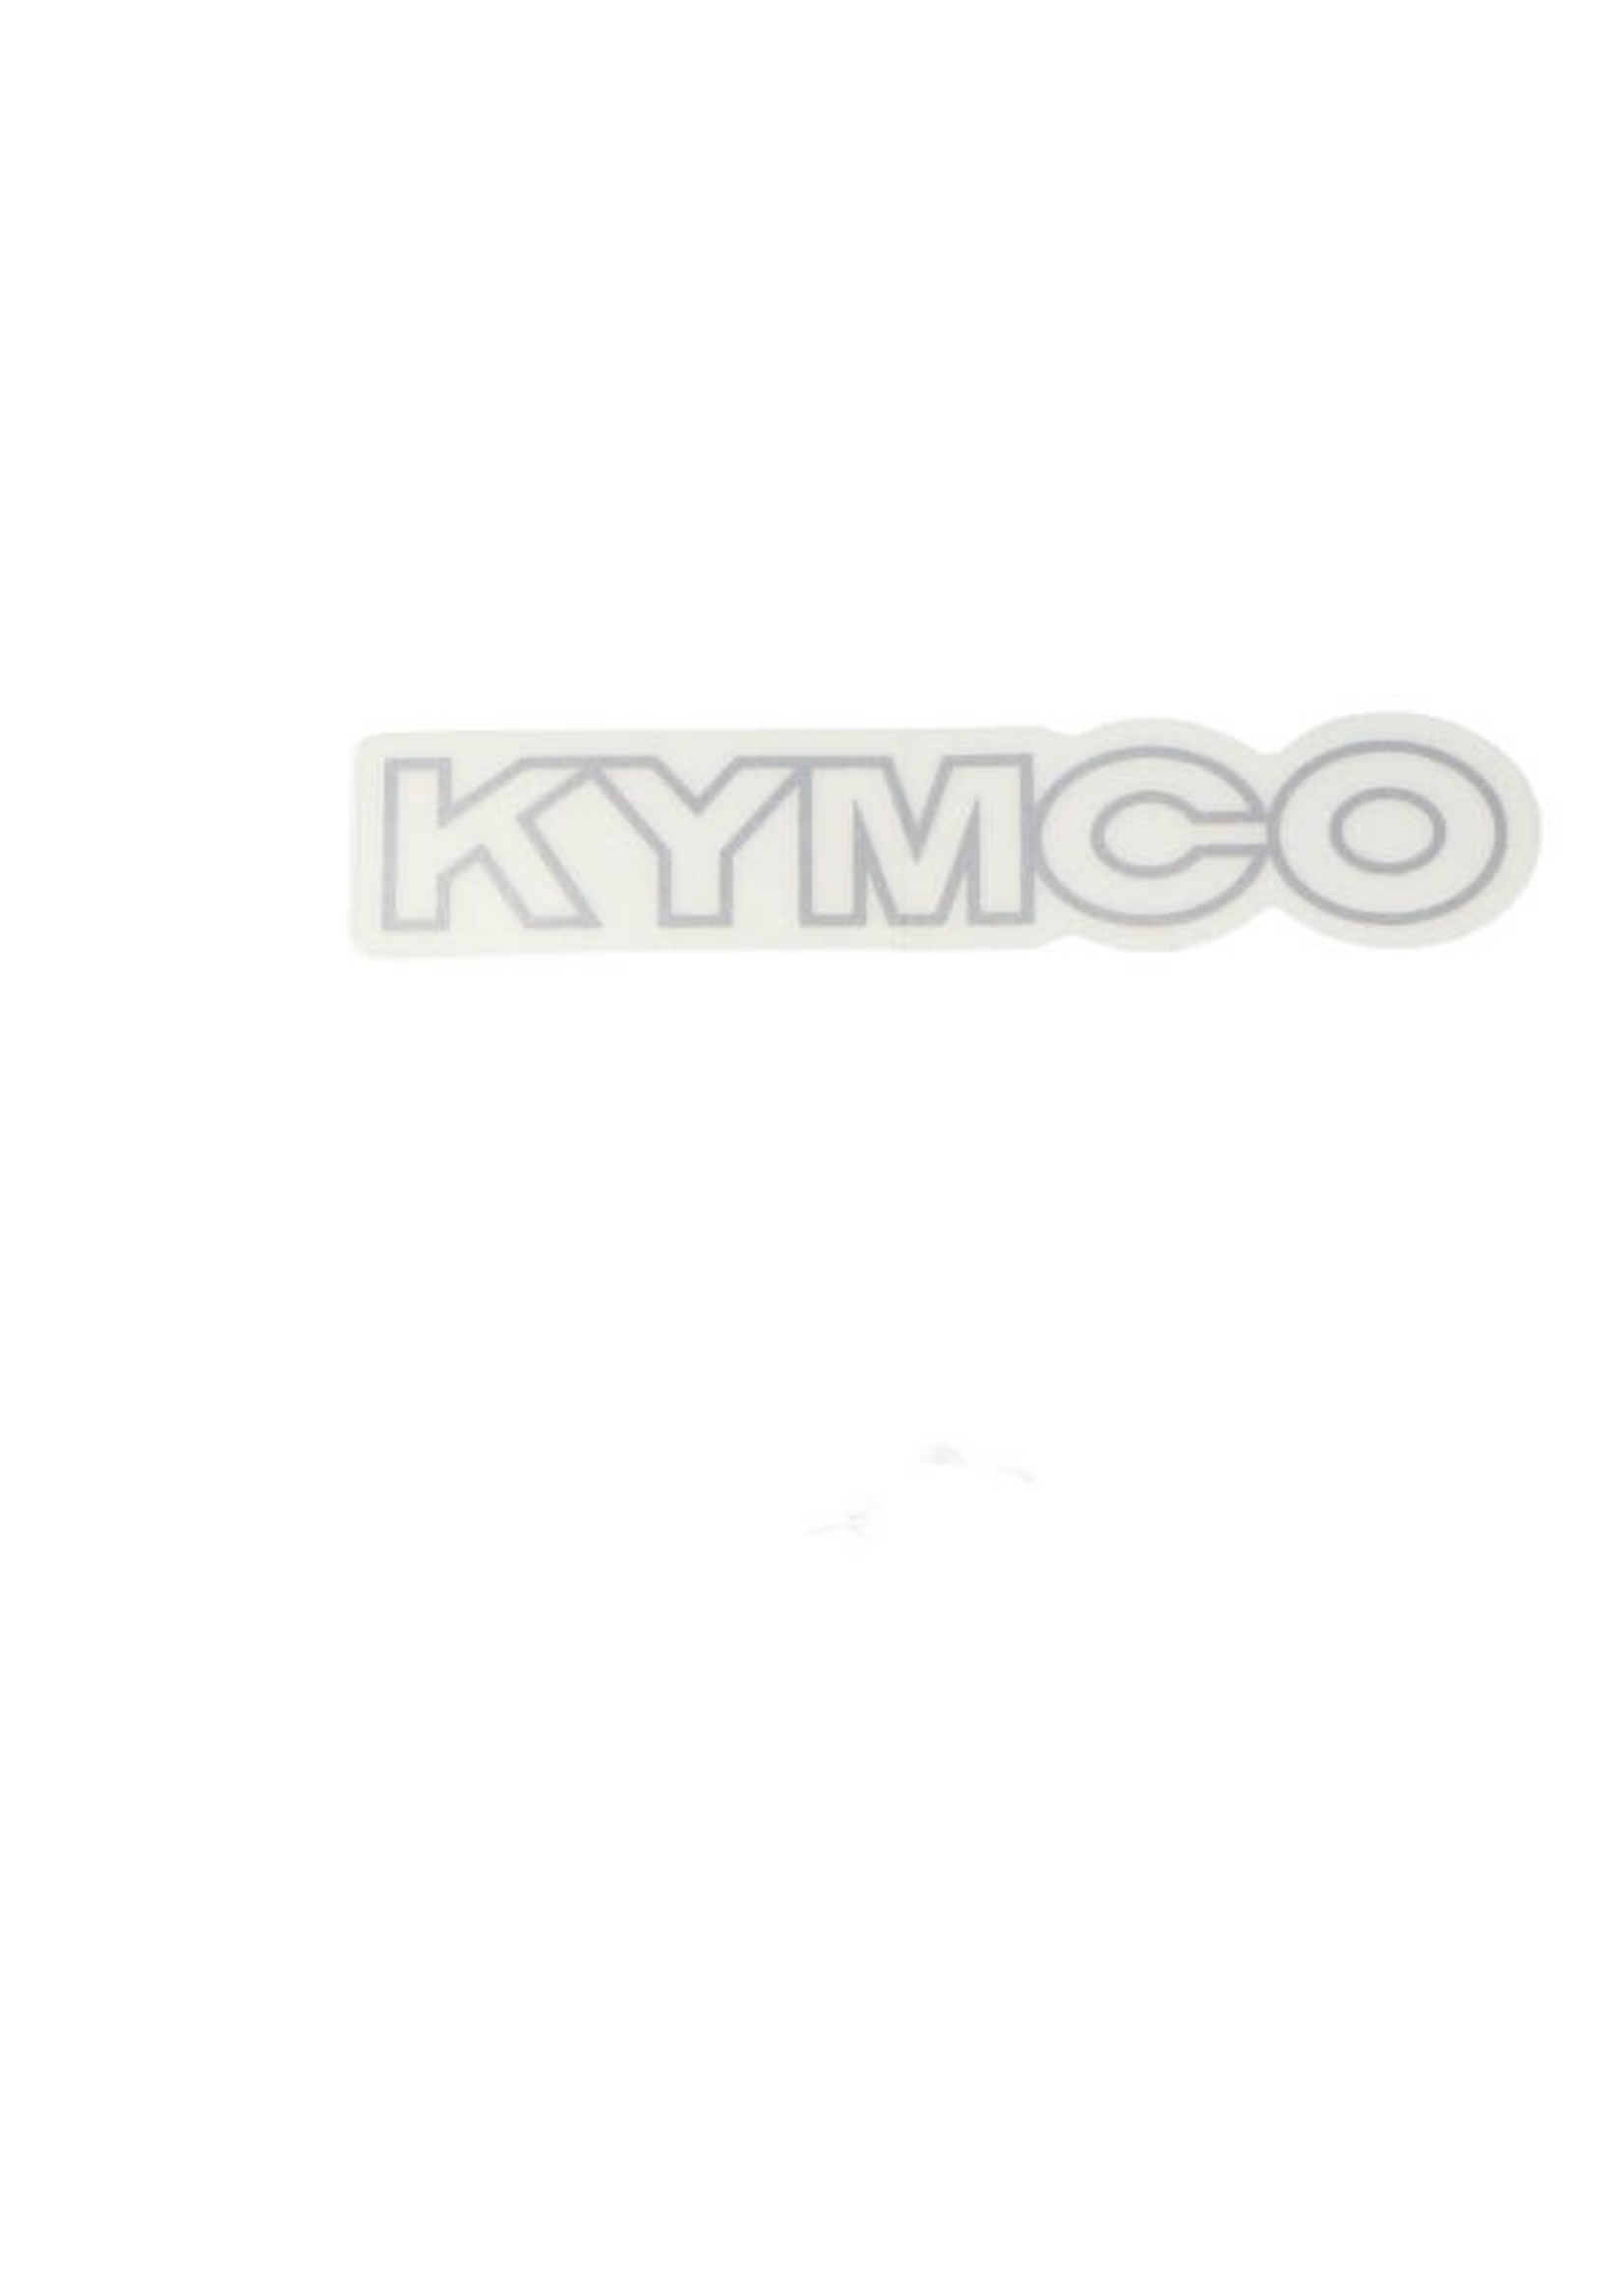 Kymco sticker beenschild woord [kymco] vp 50 zwart kymco orig 87140-lfc8-e80-t03